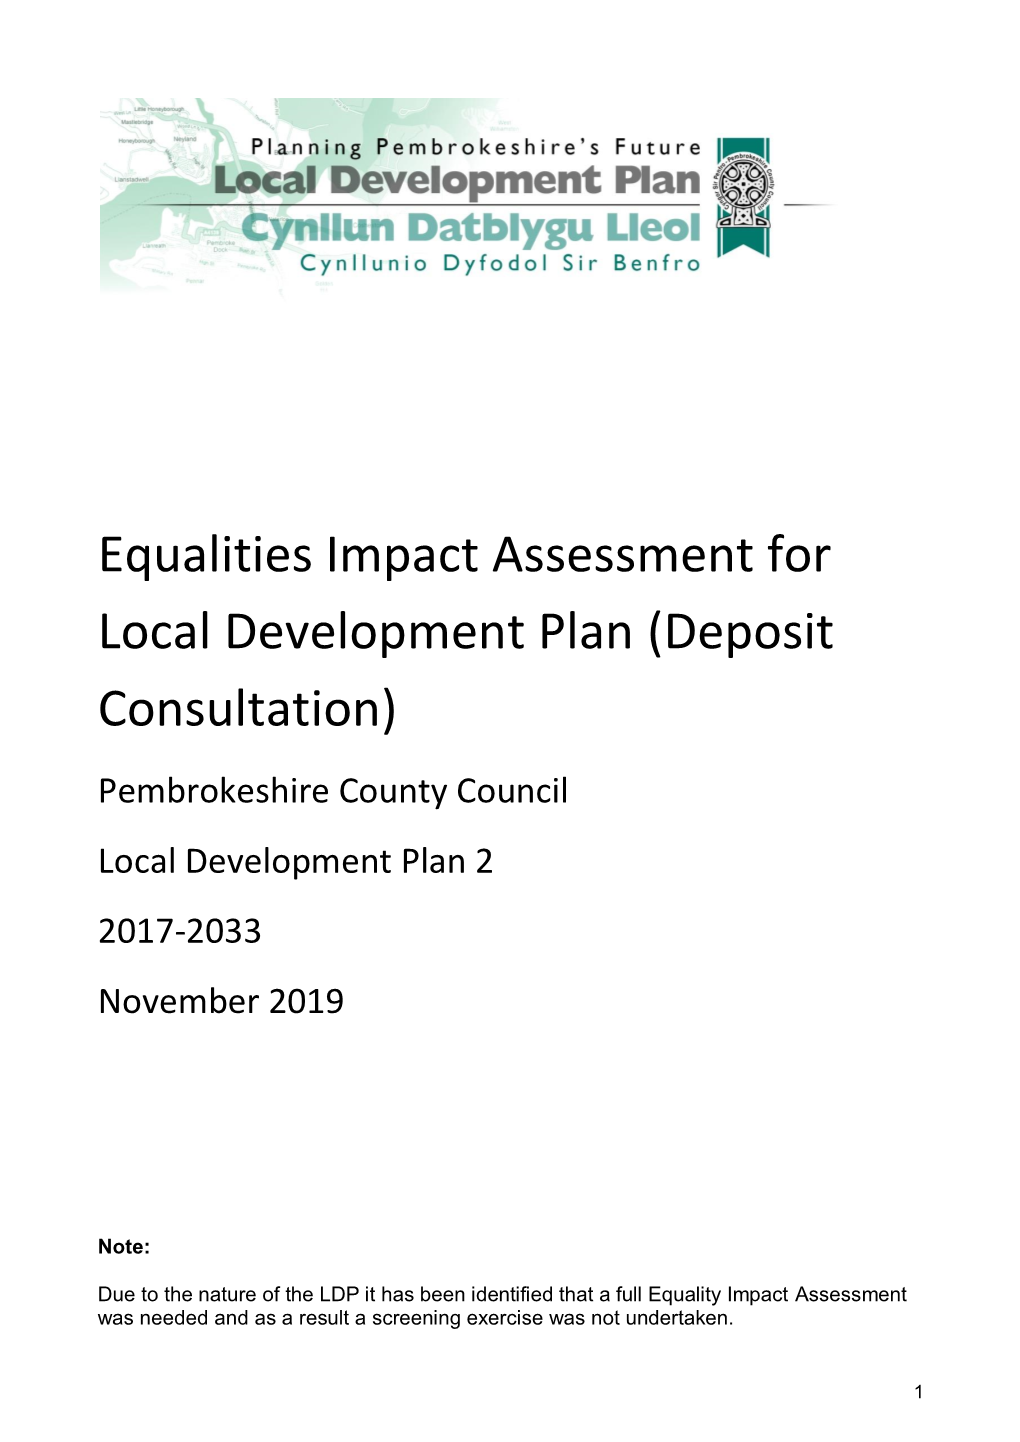 Equality Impact Assessment Deposit Plan